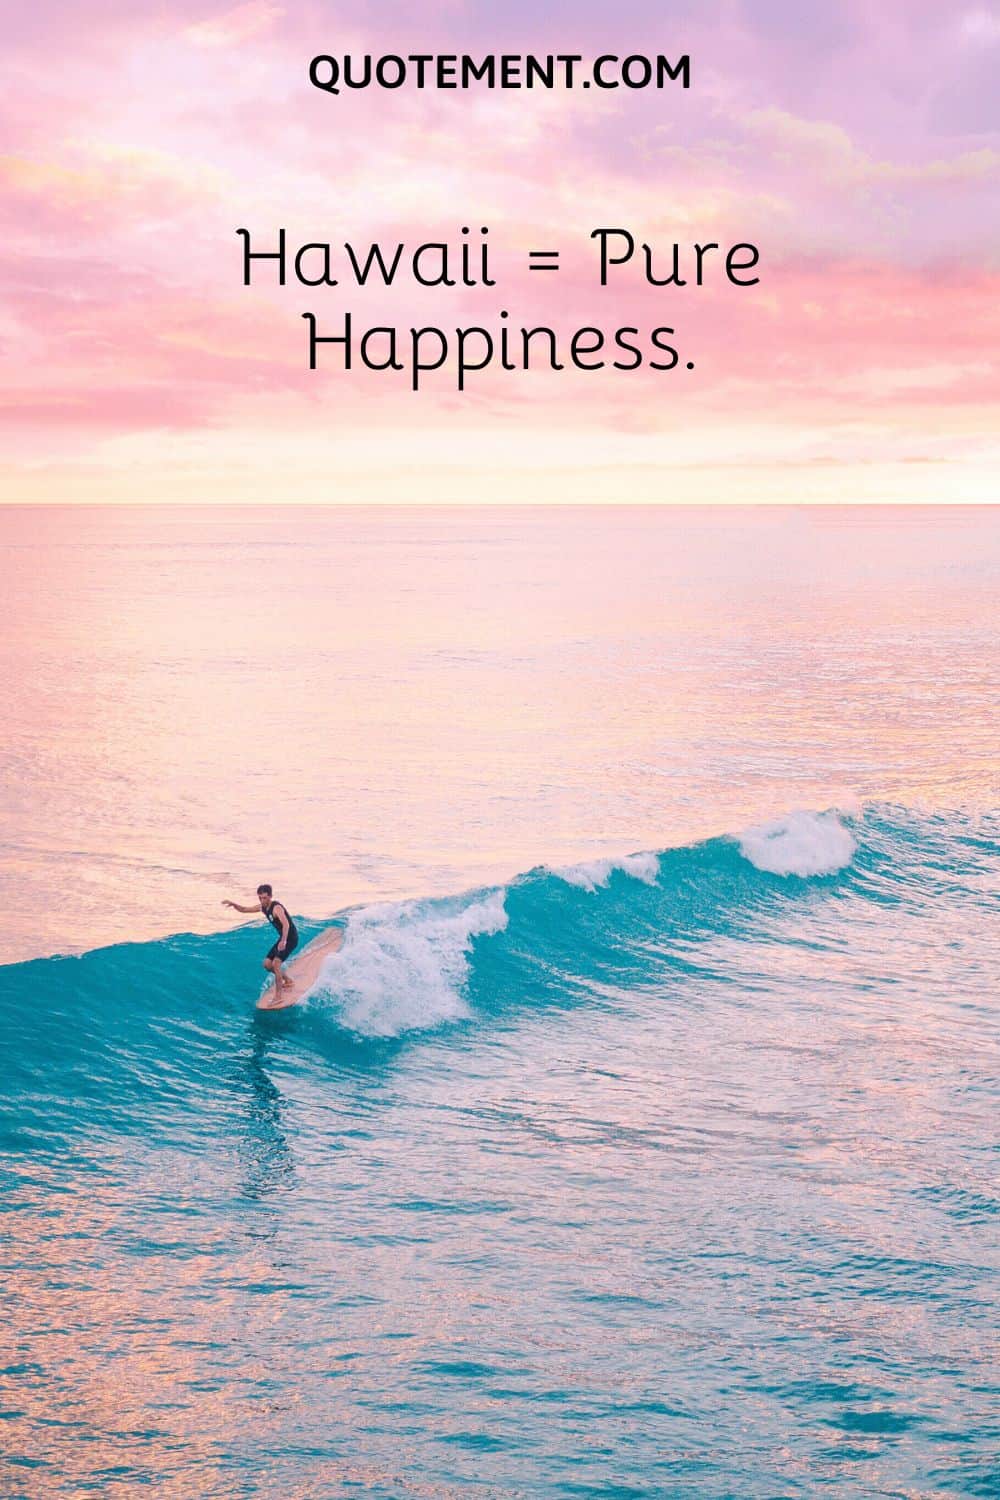 Hawaii = Pure Happiness.